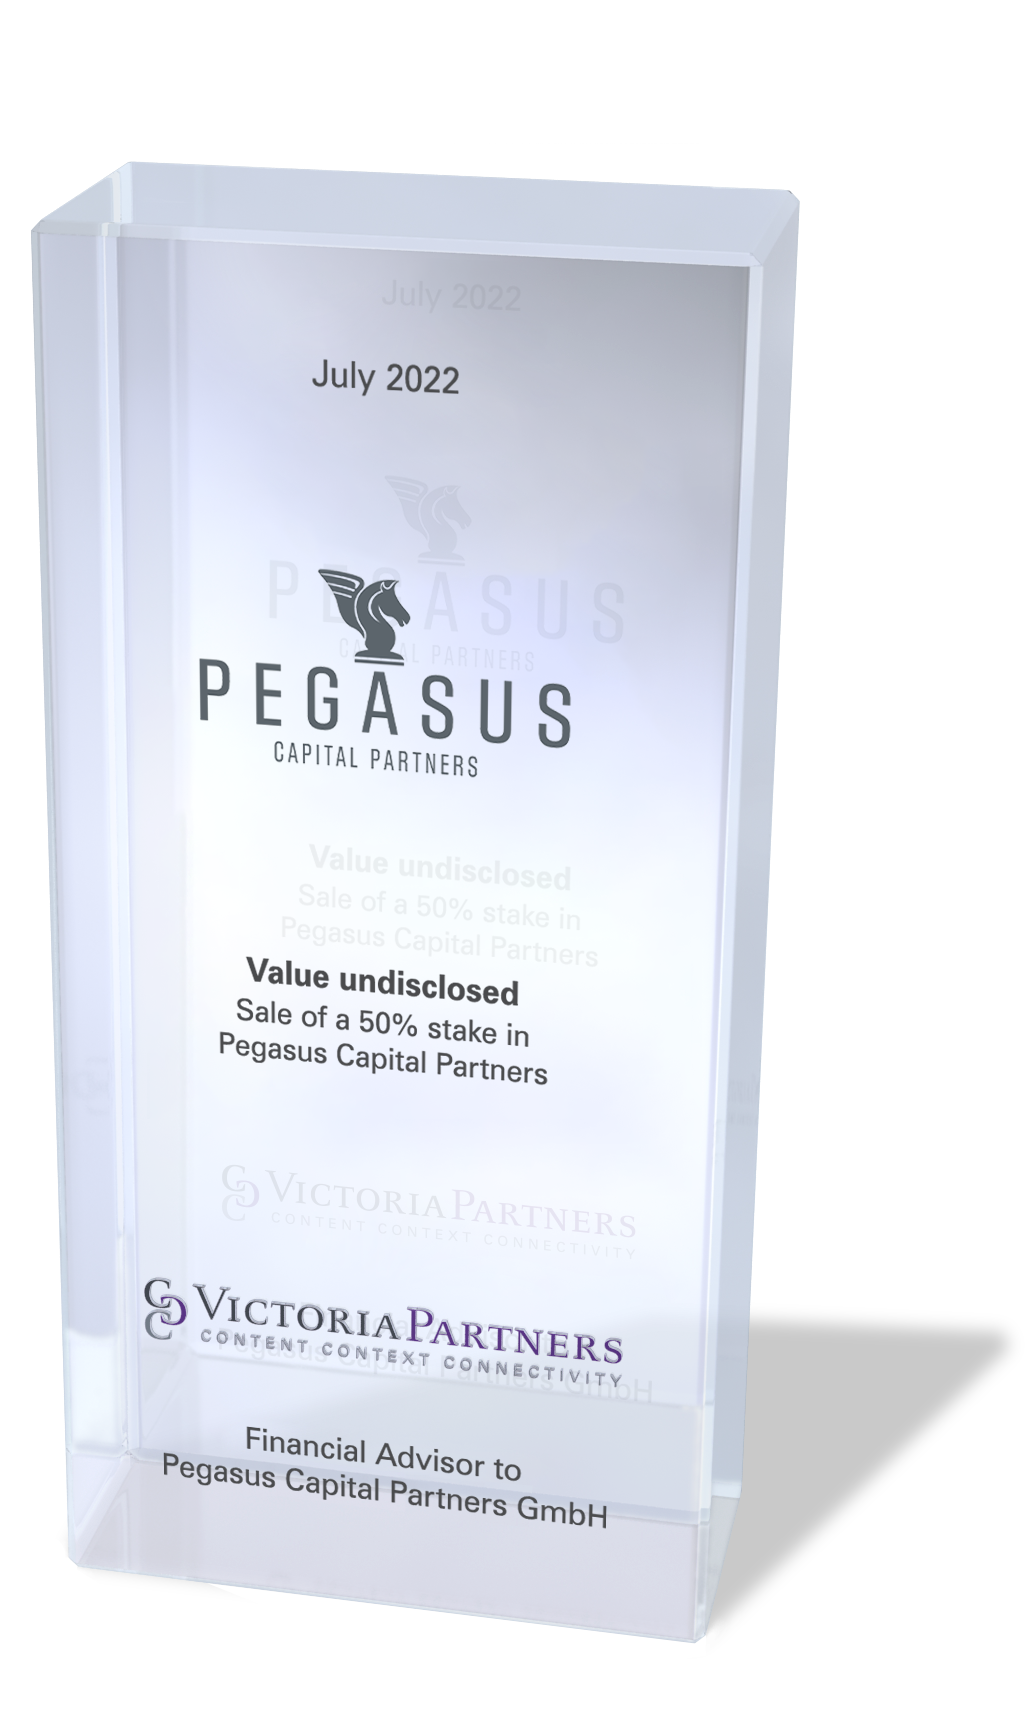 VICTORIAPARTNERS - Financial Advisor to Pegasus Capital Partners GmbH - July 2022